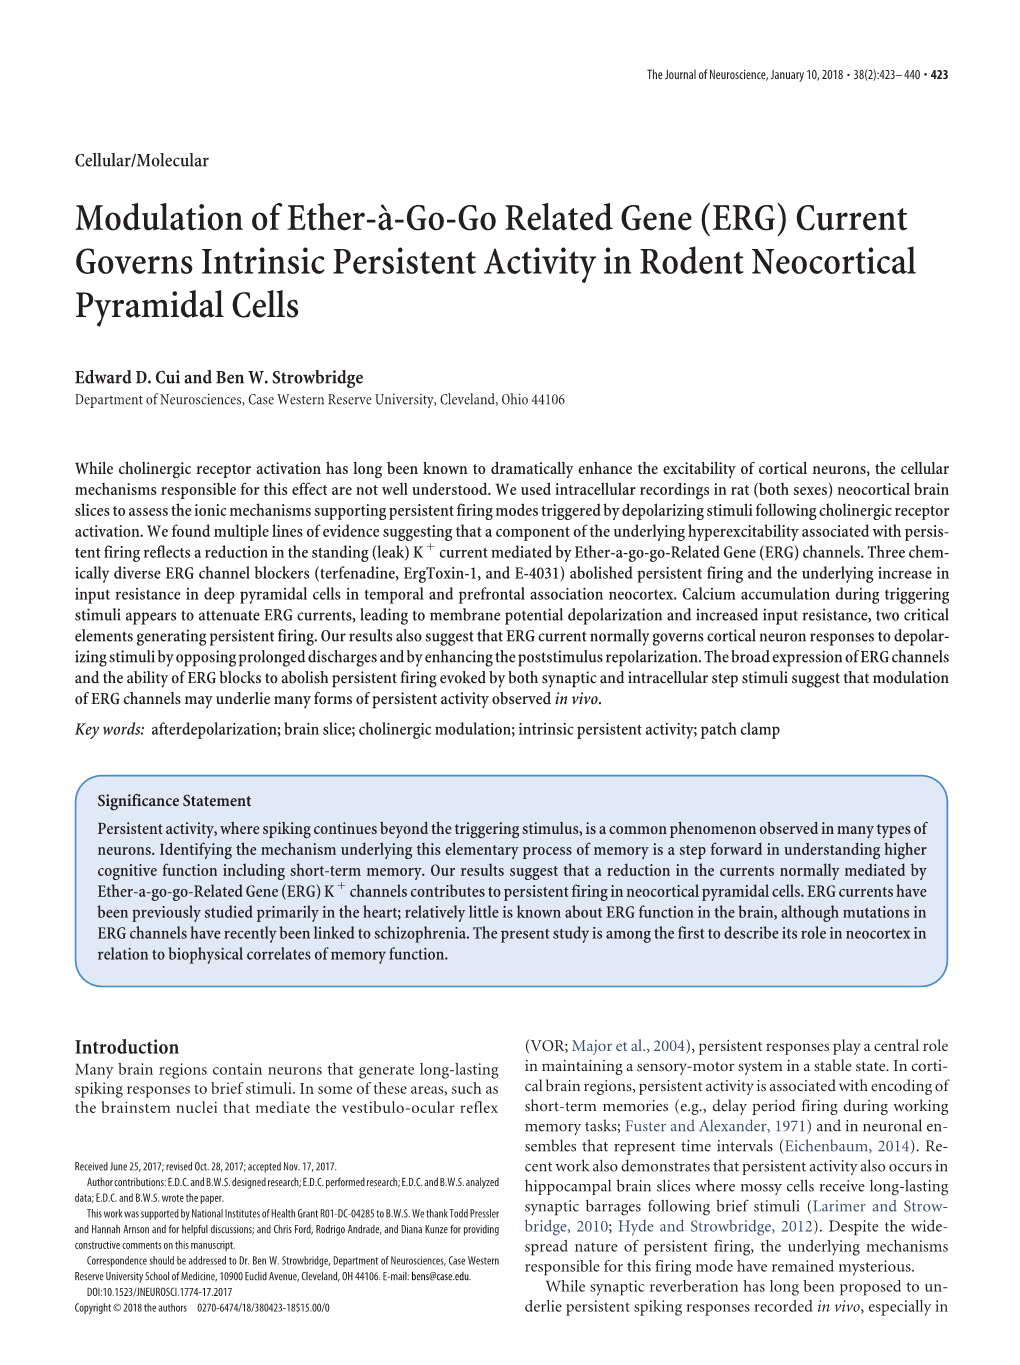 Modulation of Ether-À-Go-Go Related Gene